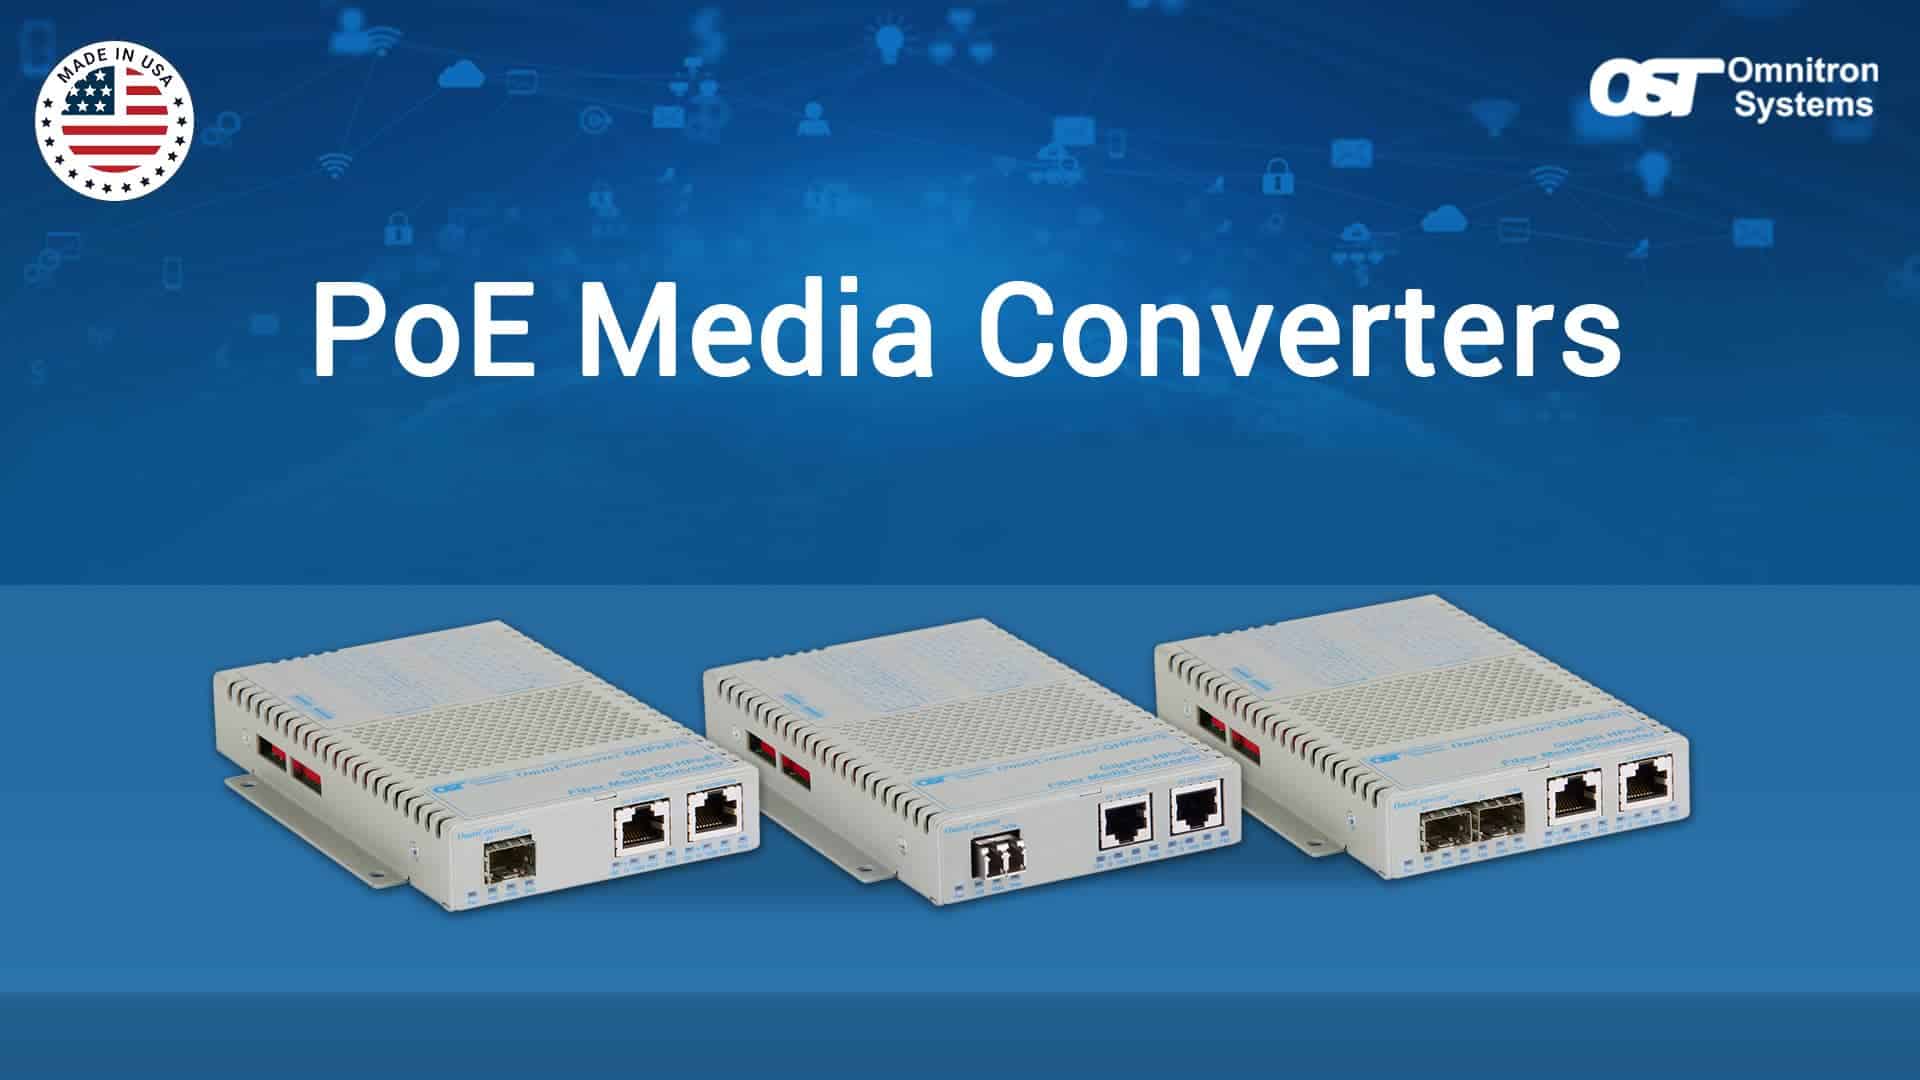 PoE media converters